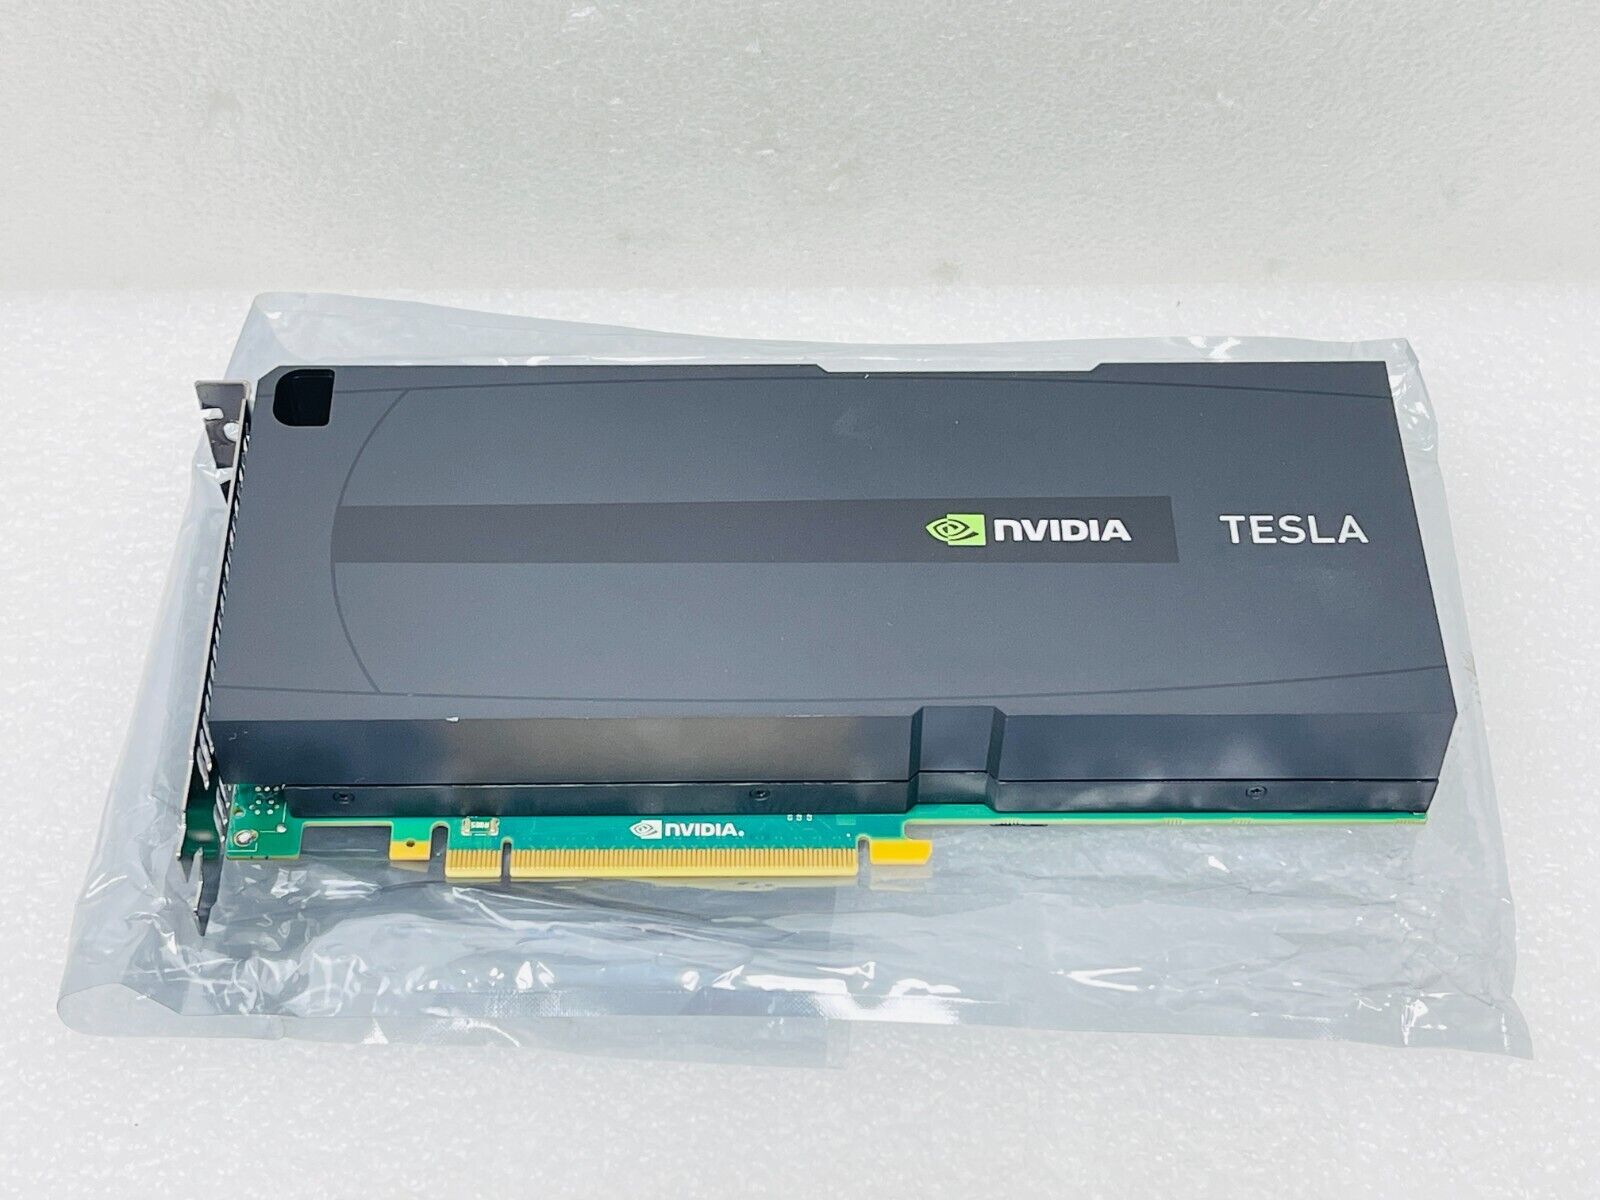 NVIDIA TESLA M2090 6GB GDDR5 PCI-E X16 SERVER GPU VIDEO CARD / LITTLE USE